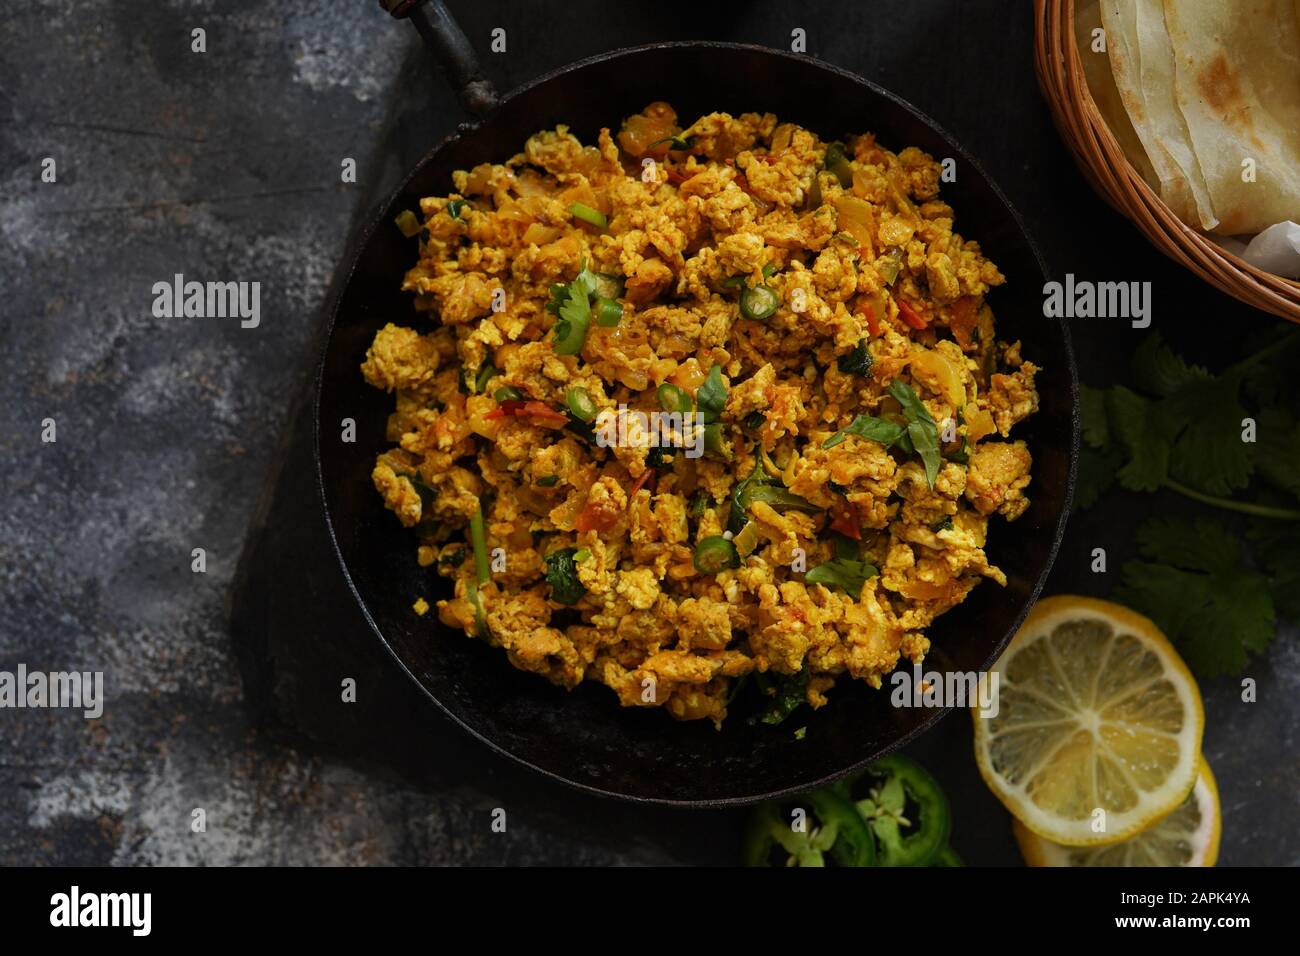 Scrambled eggs/ Masala egg Bhurji served with roti, selective focus Stock Photo